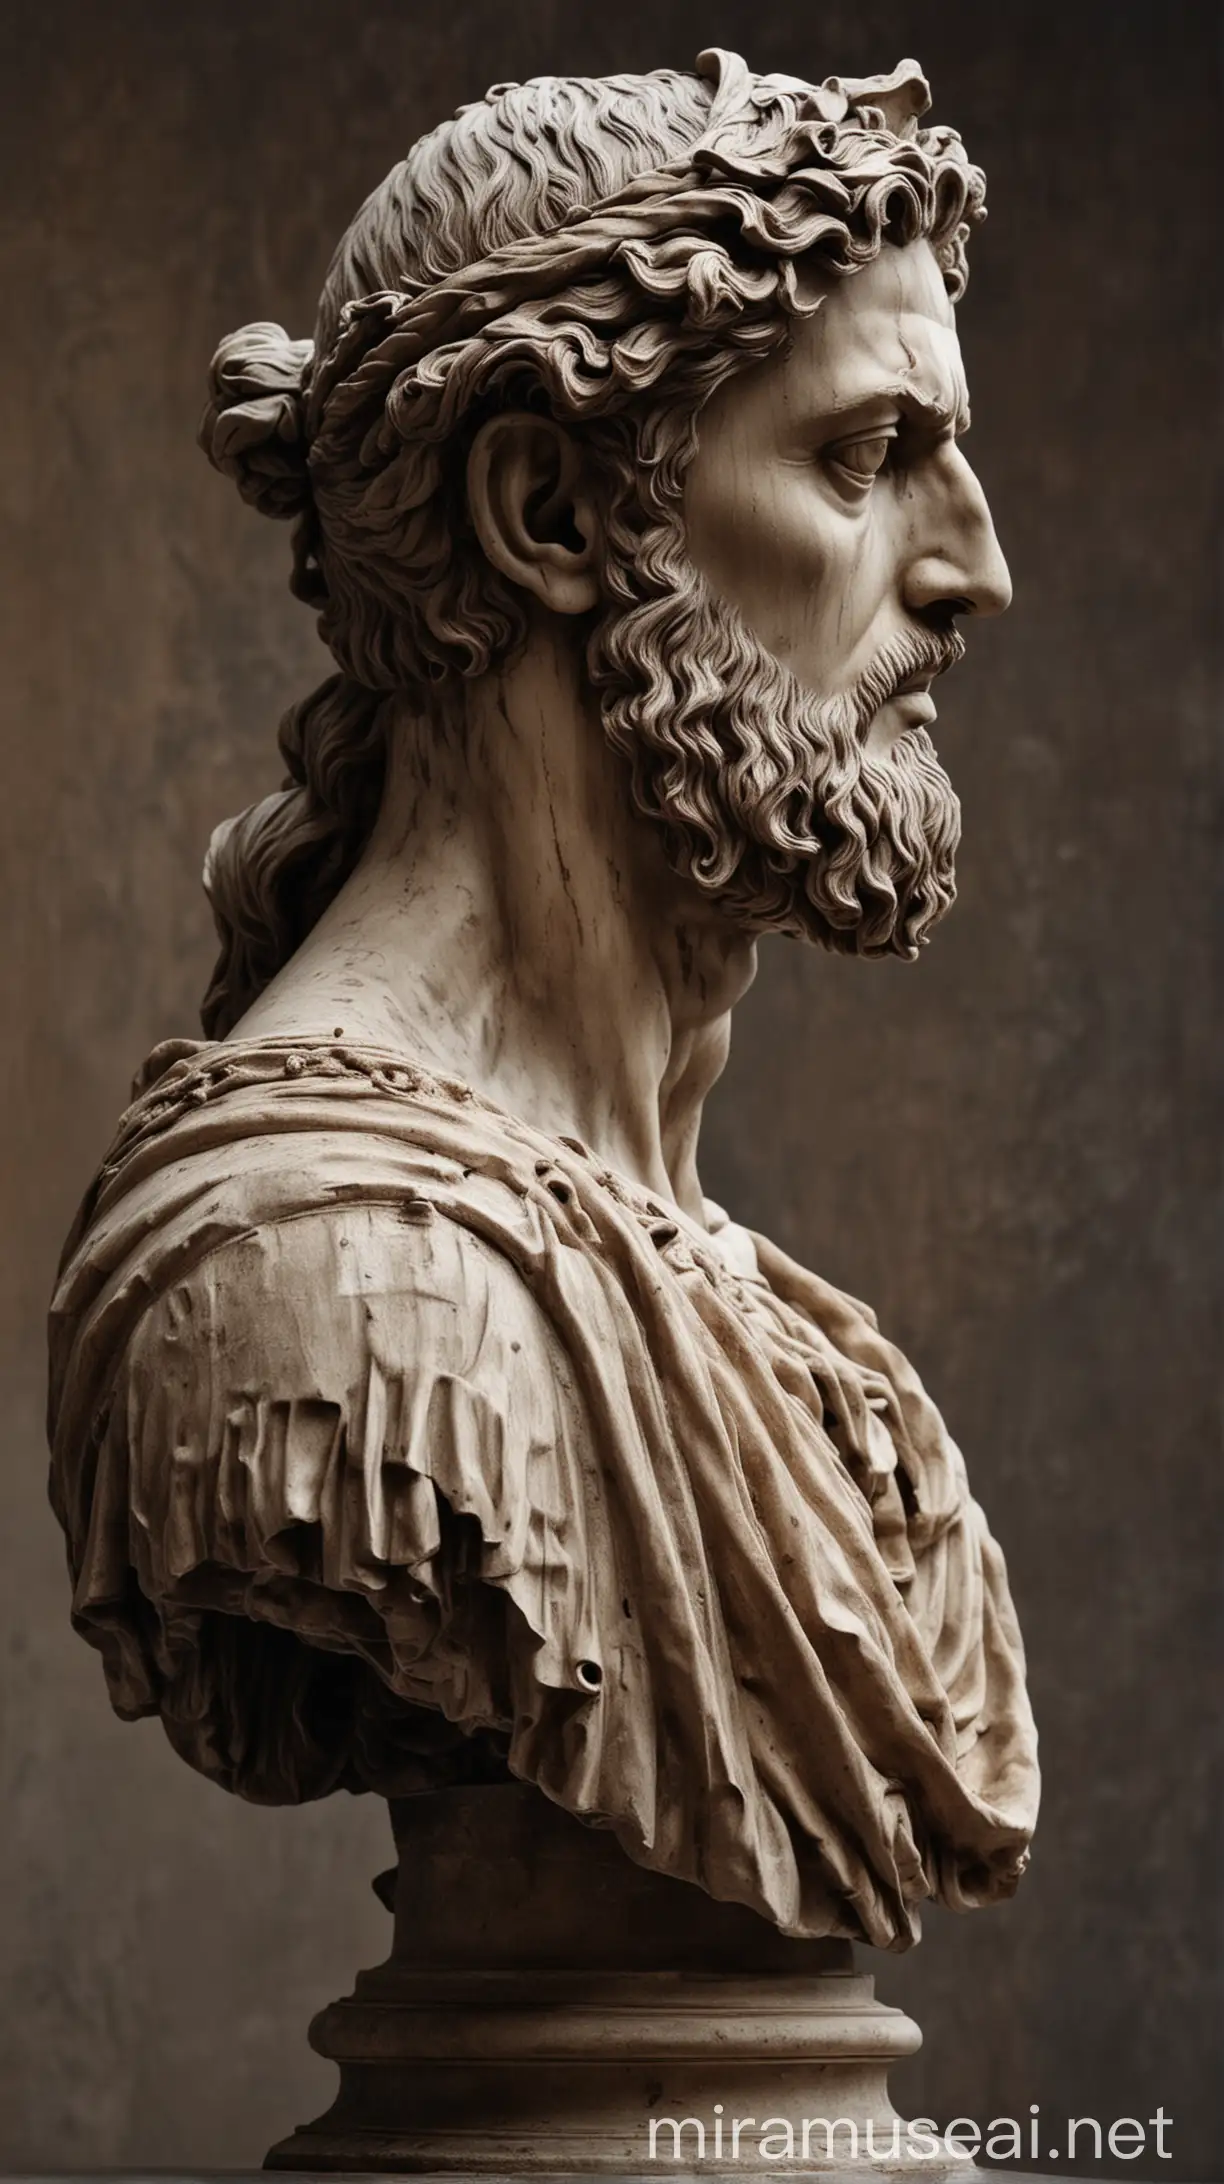 Stoic statue images long hair dark.